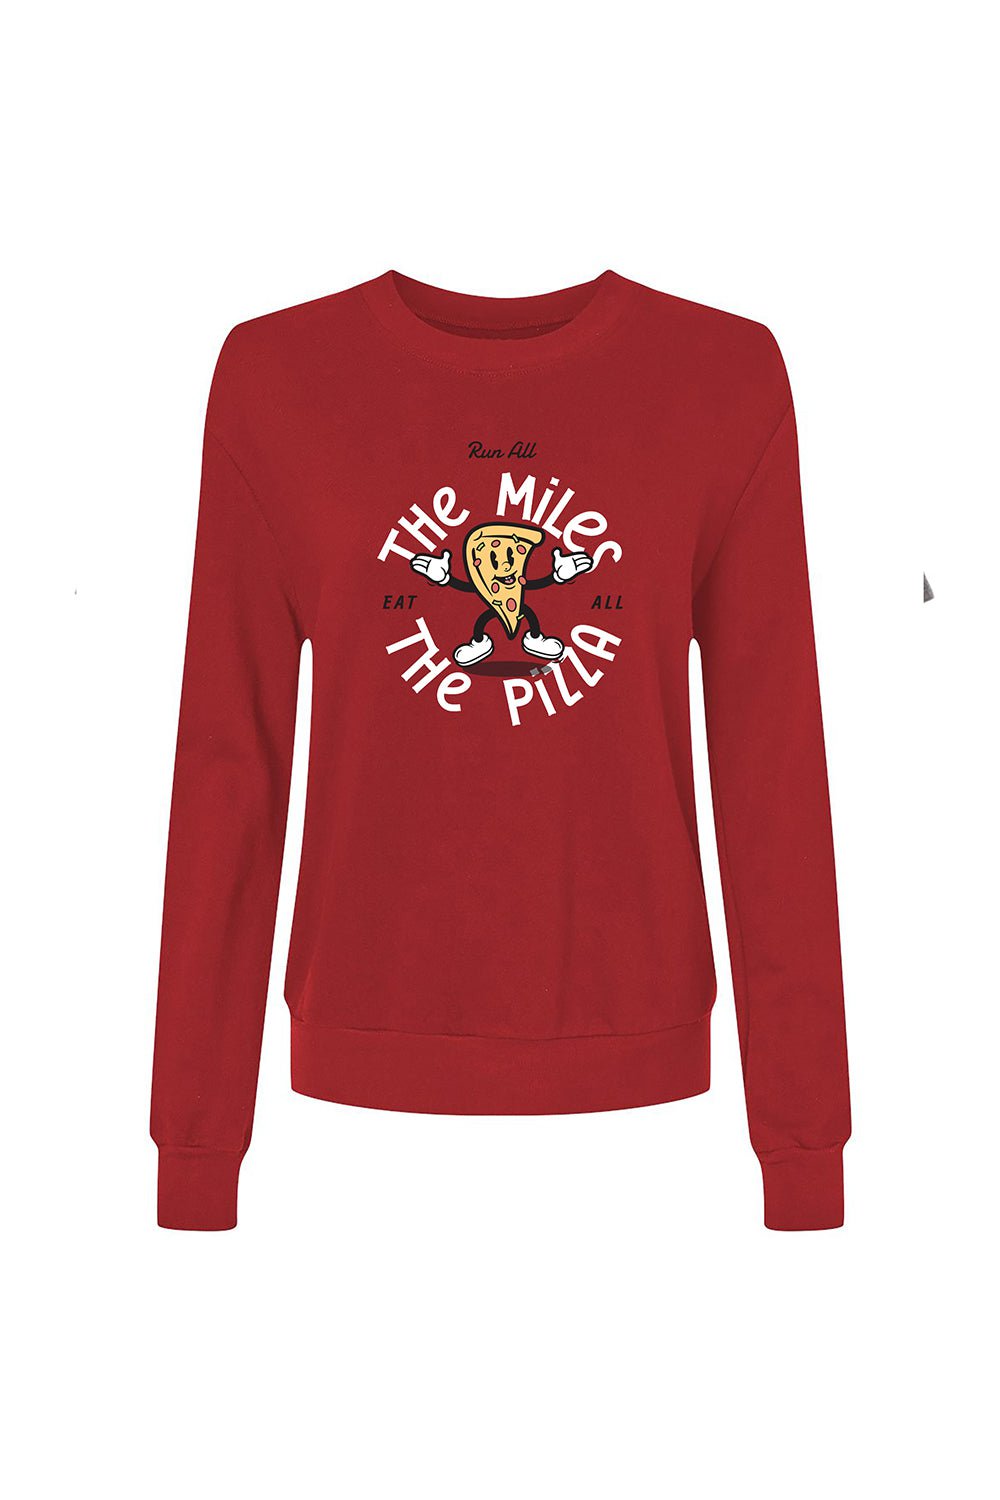 Sarah Marie Design Studio Sweatshirt Run All The Miles, Eat All The Pizza Sweatshirt